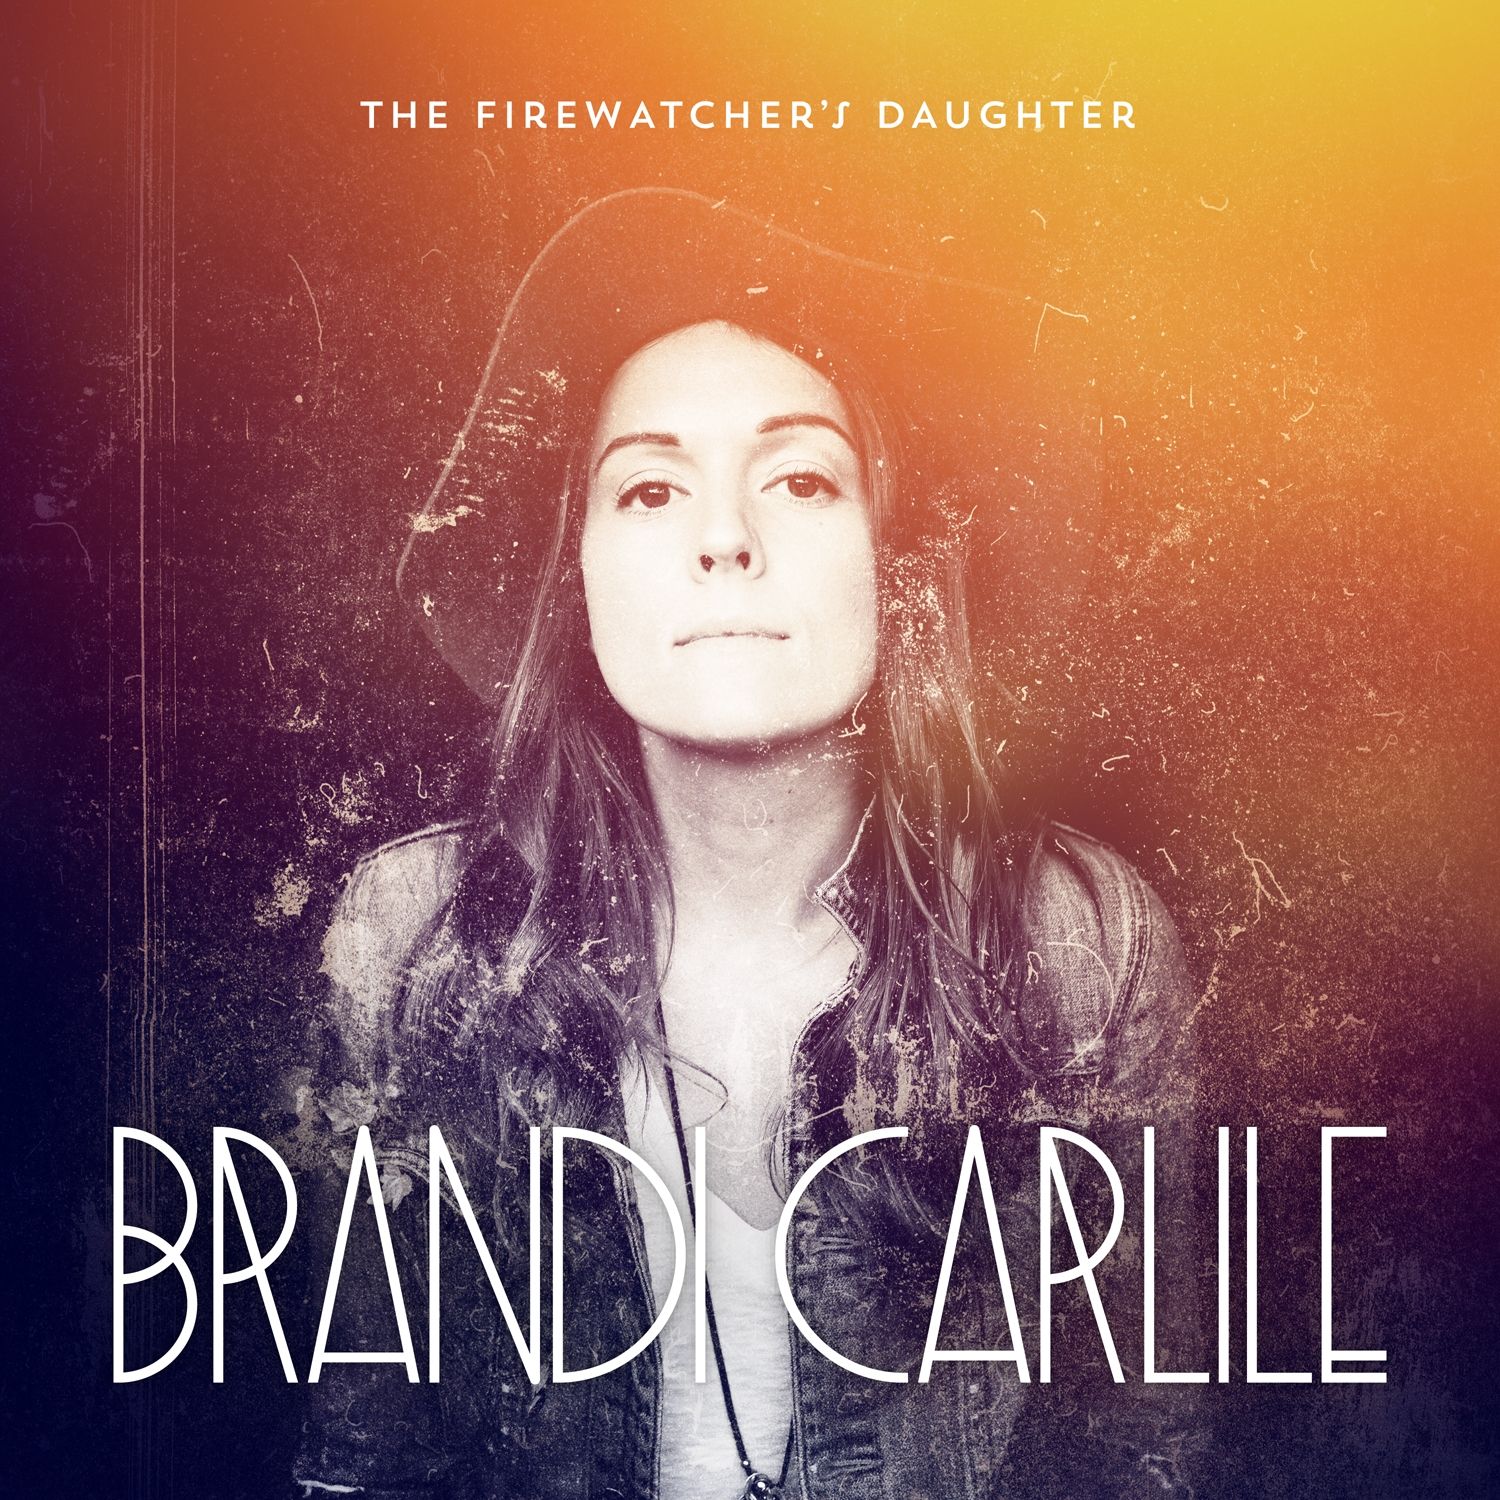 Imagem do álbum The Firewatcher's Daughter do(a) artista Brandi Carlile